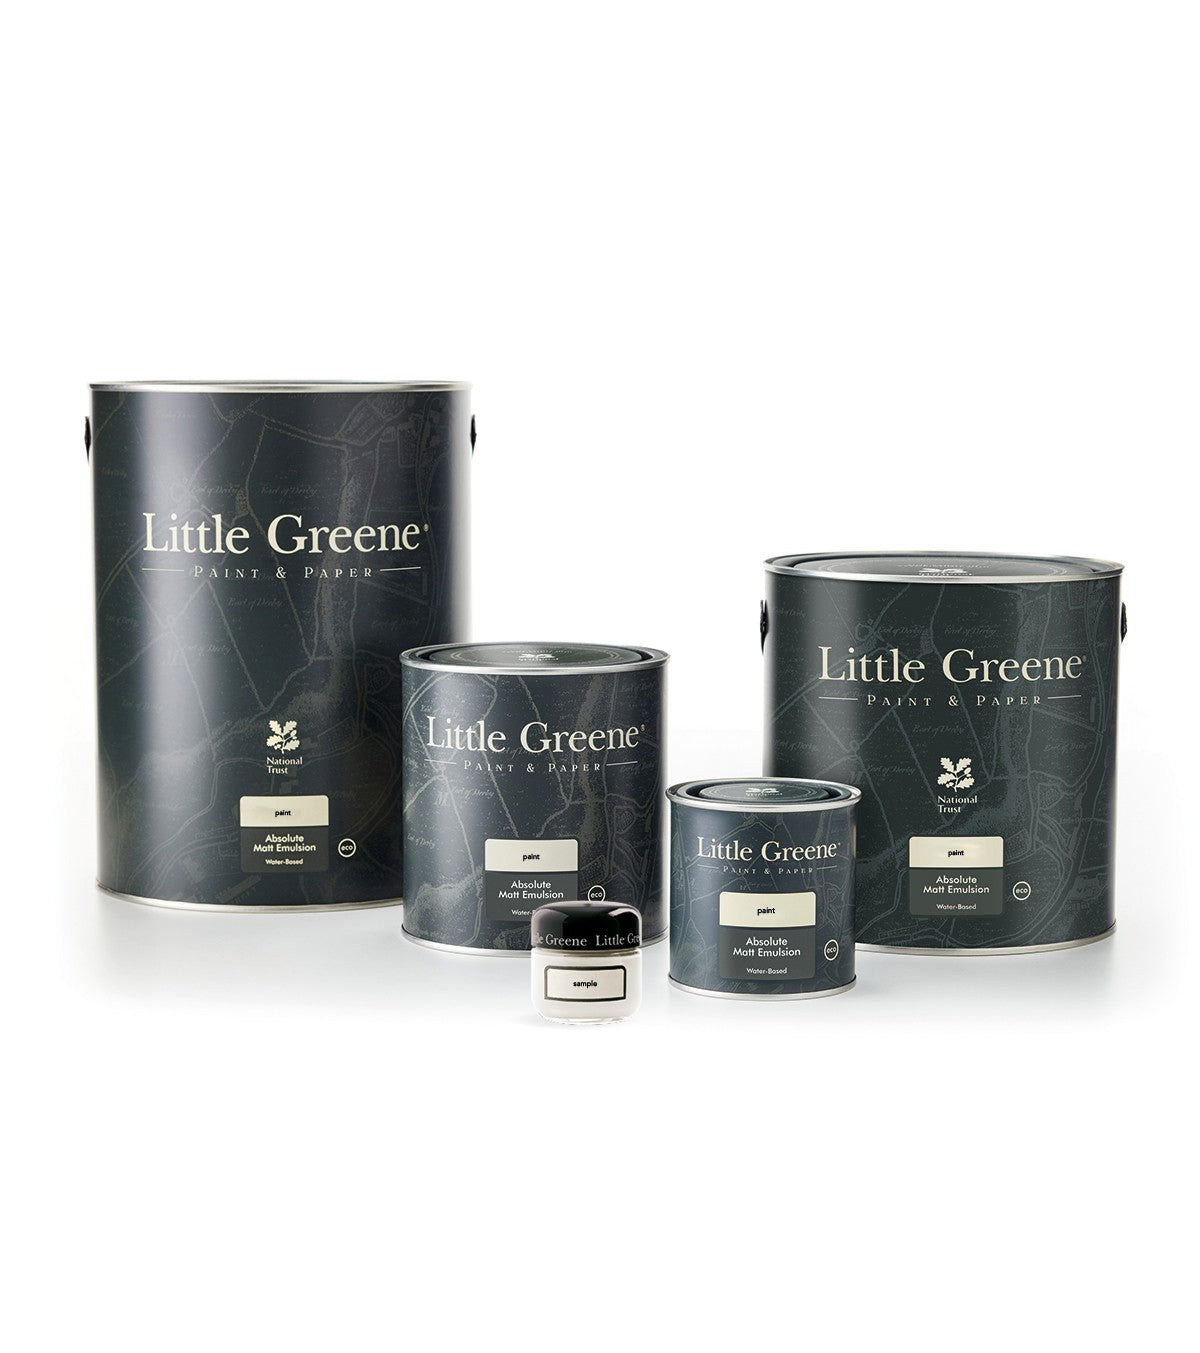 Little Greene paint - Stainless steel (224)